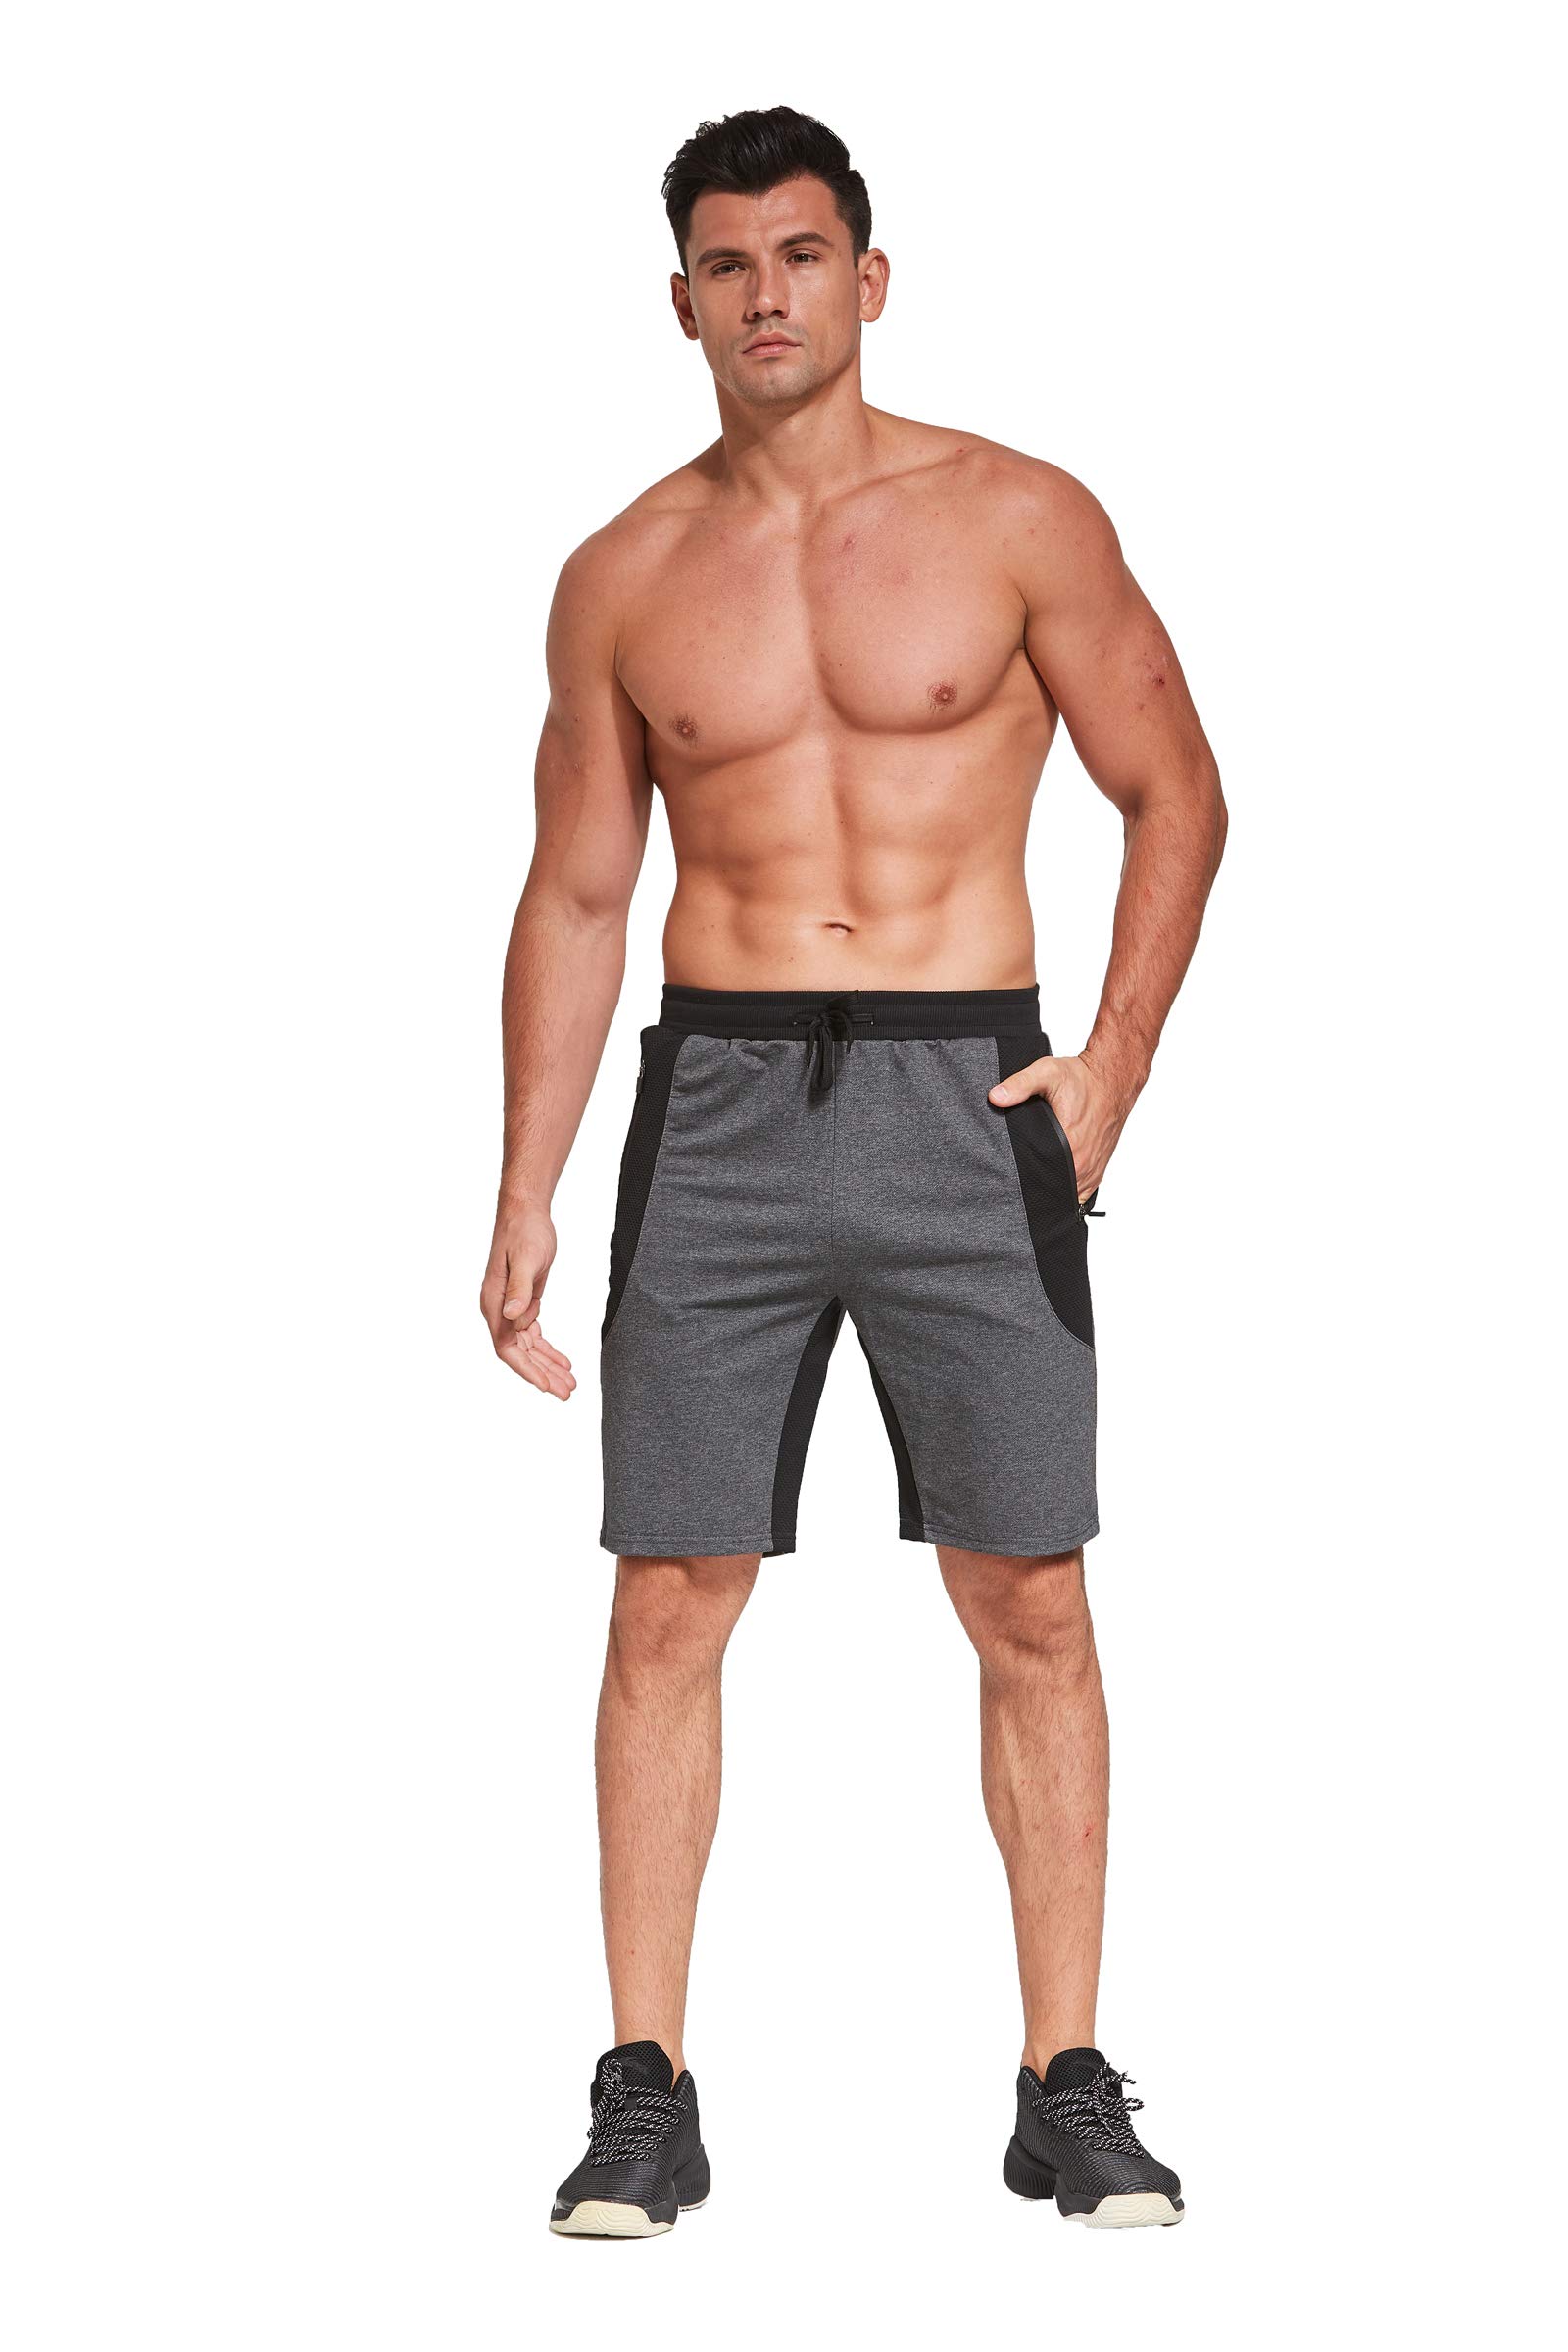 Tansozer Mens Gym Shorts Summer Running Shorts with Zip Pockets 